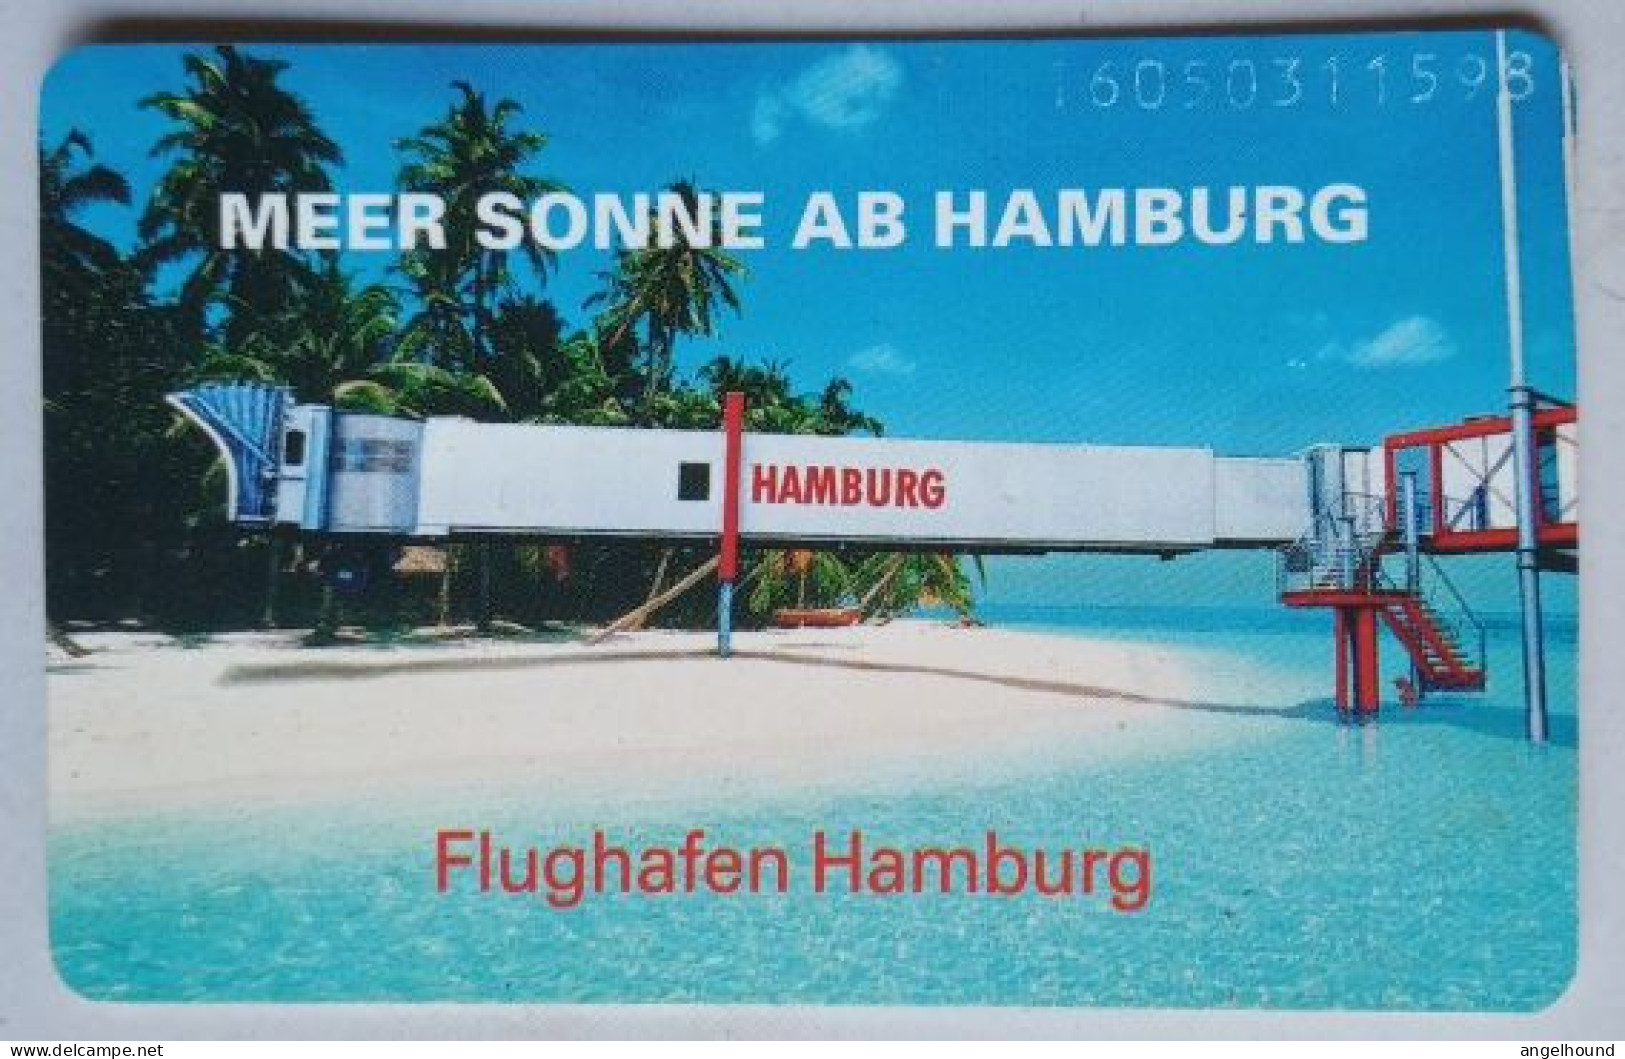 Germany 6 DM  MINT K 011 07.96 2500 Mintage - Flughafen Hamburg / Meer Sonneab Hamburg - K-Serie : Serie Clienti